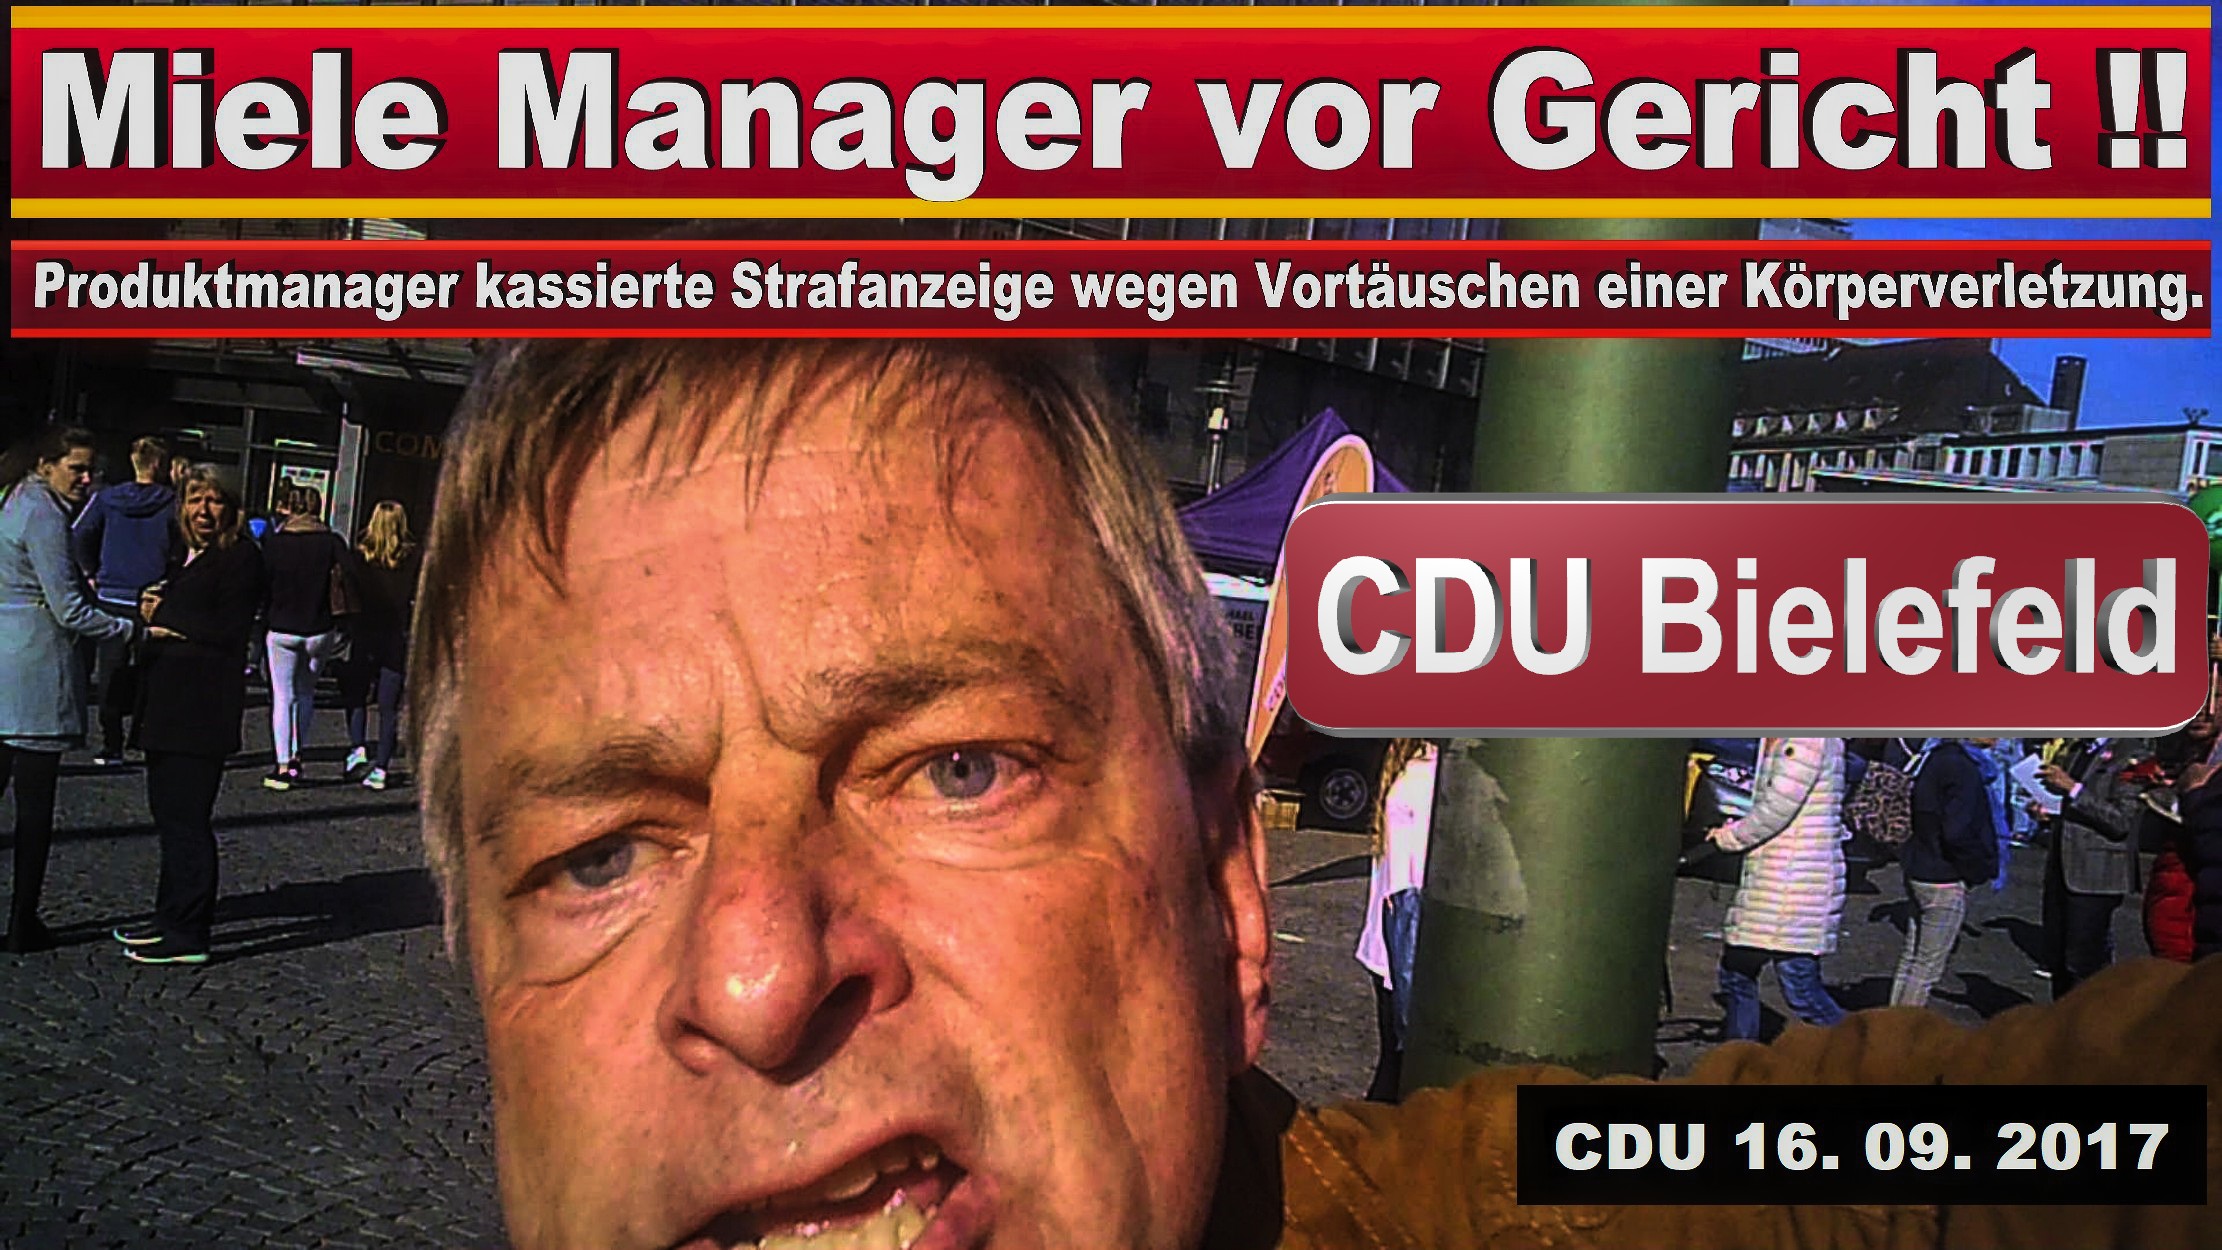 CDU BIELEFELD KANDIDATEN MICHAEL WEBER MIELE GüTERSLOH PRODUKTMANAGER JURIST SPD FDP AFD BIELEFELD